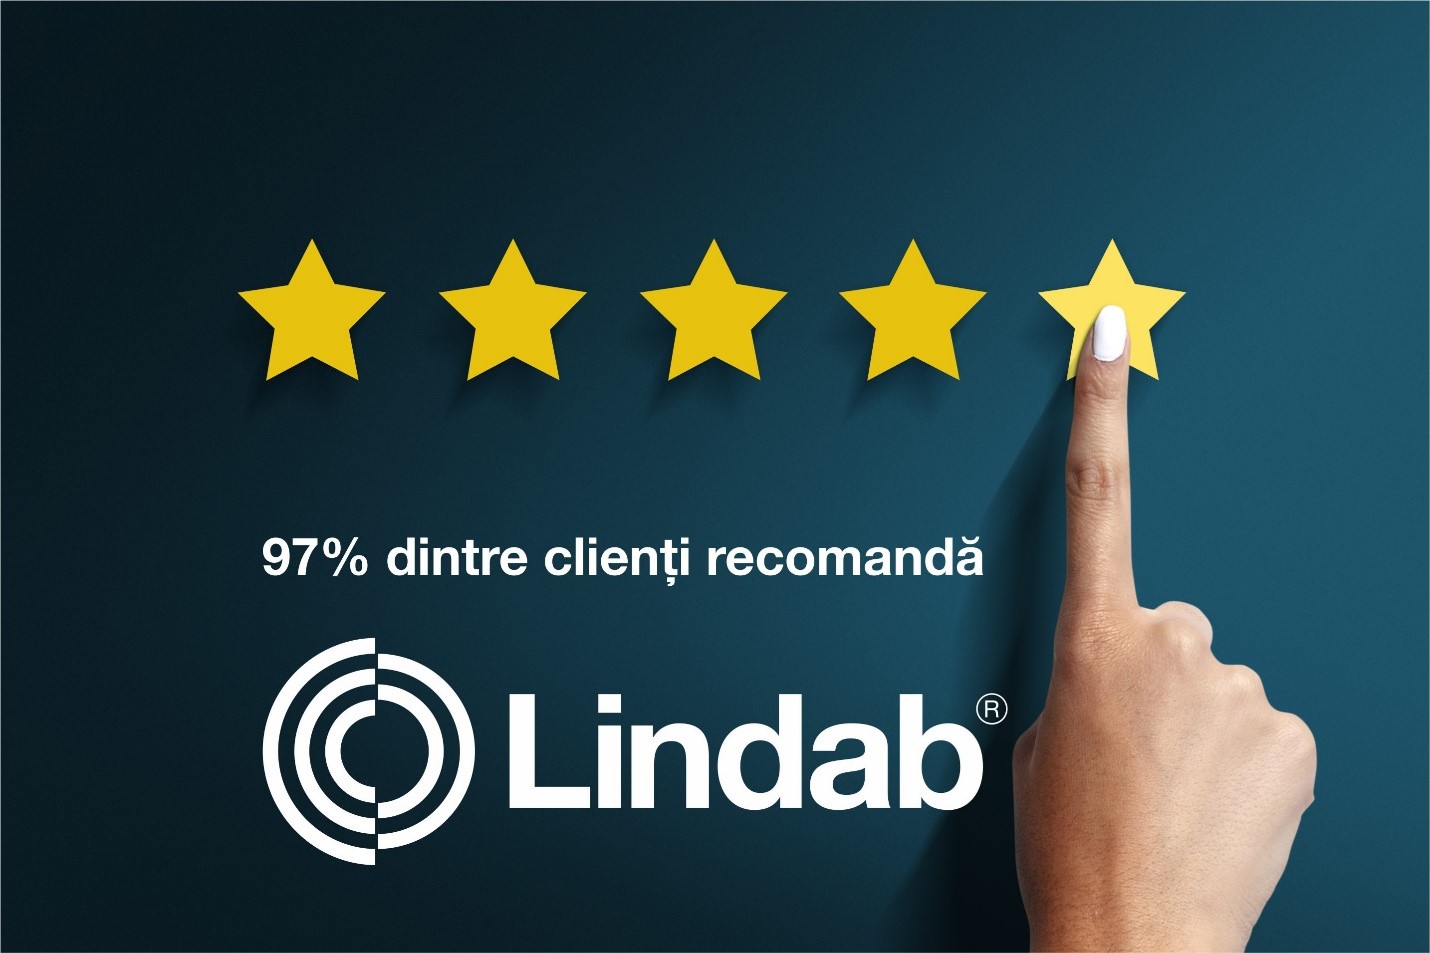 97% dintre clienti recomanda Lindab